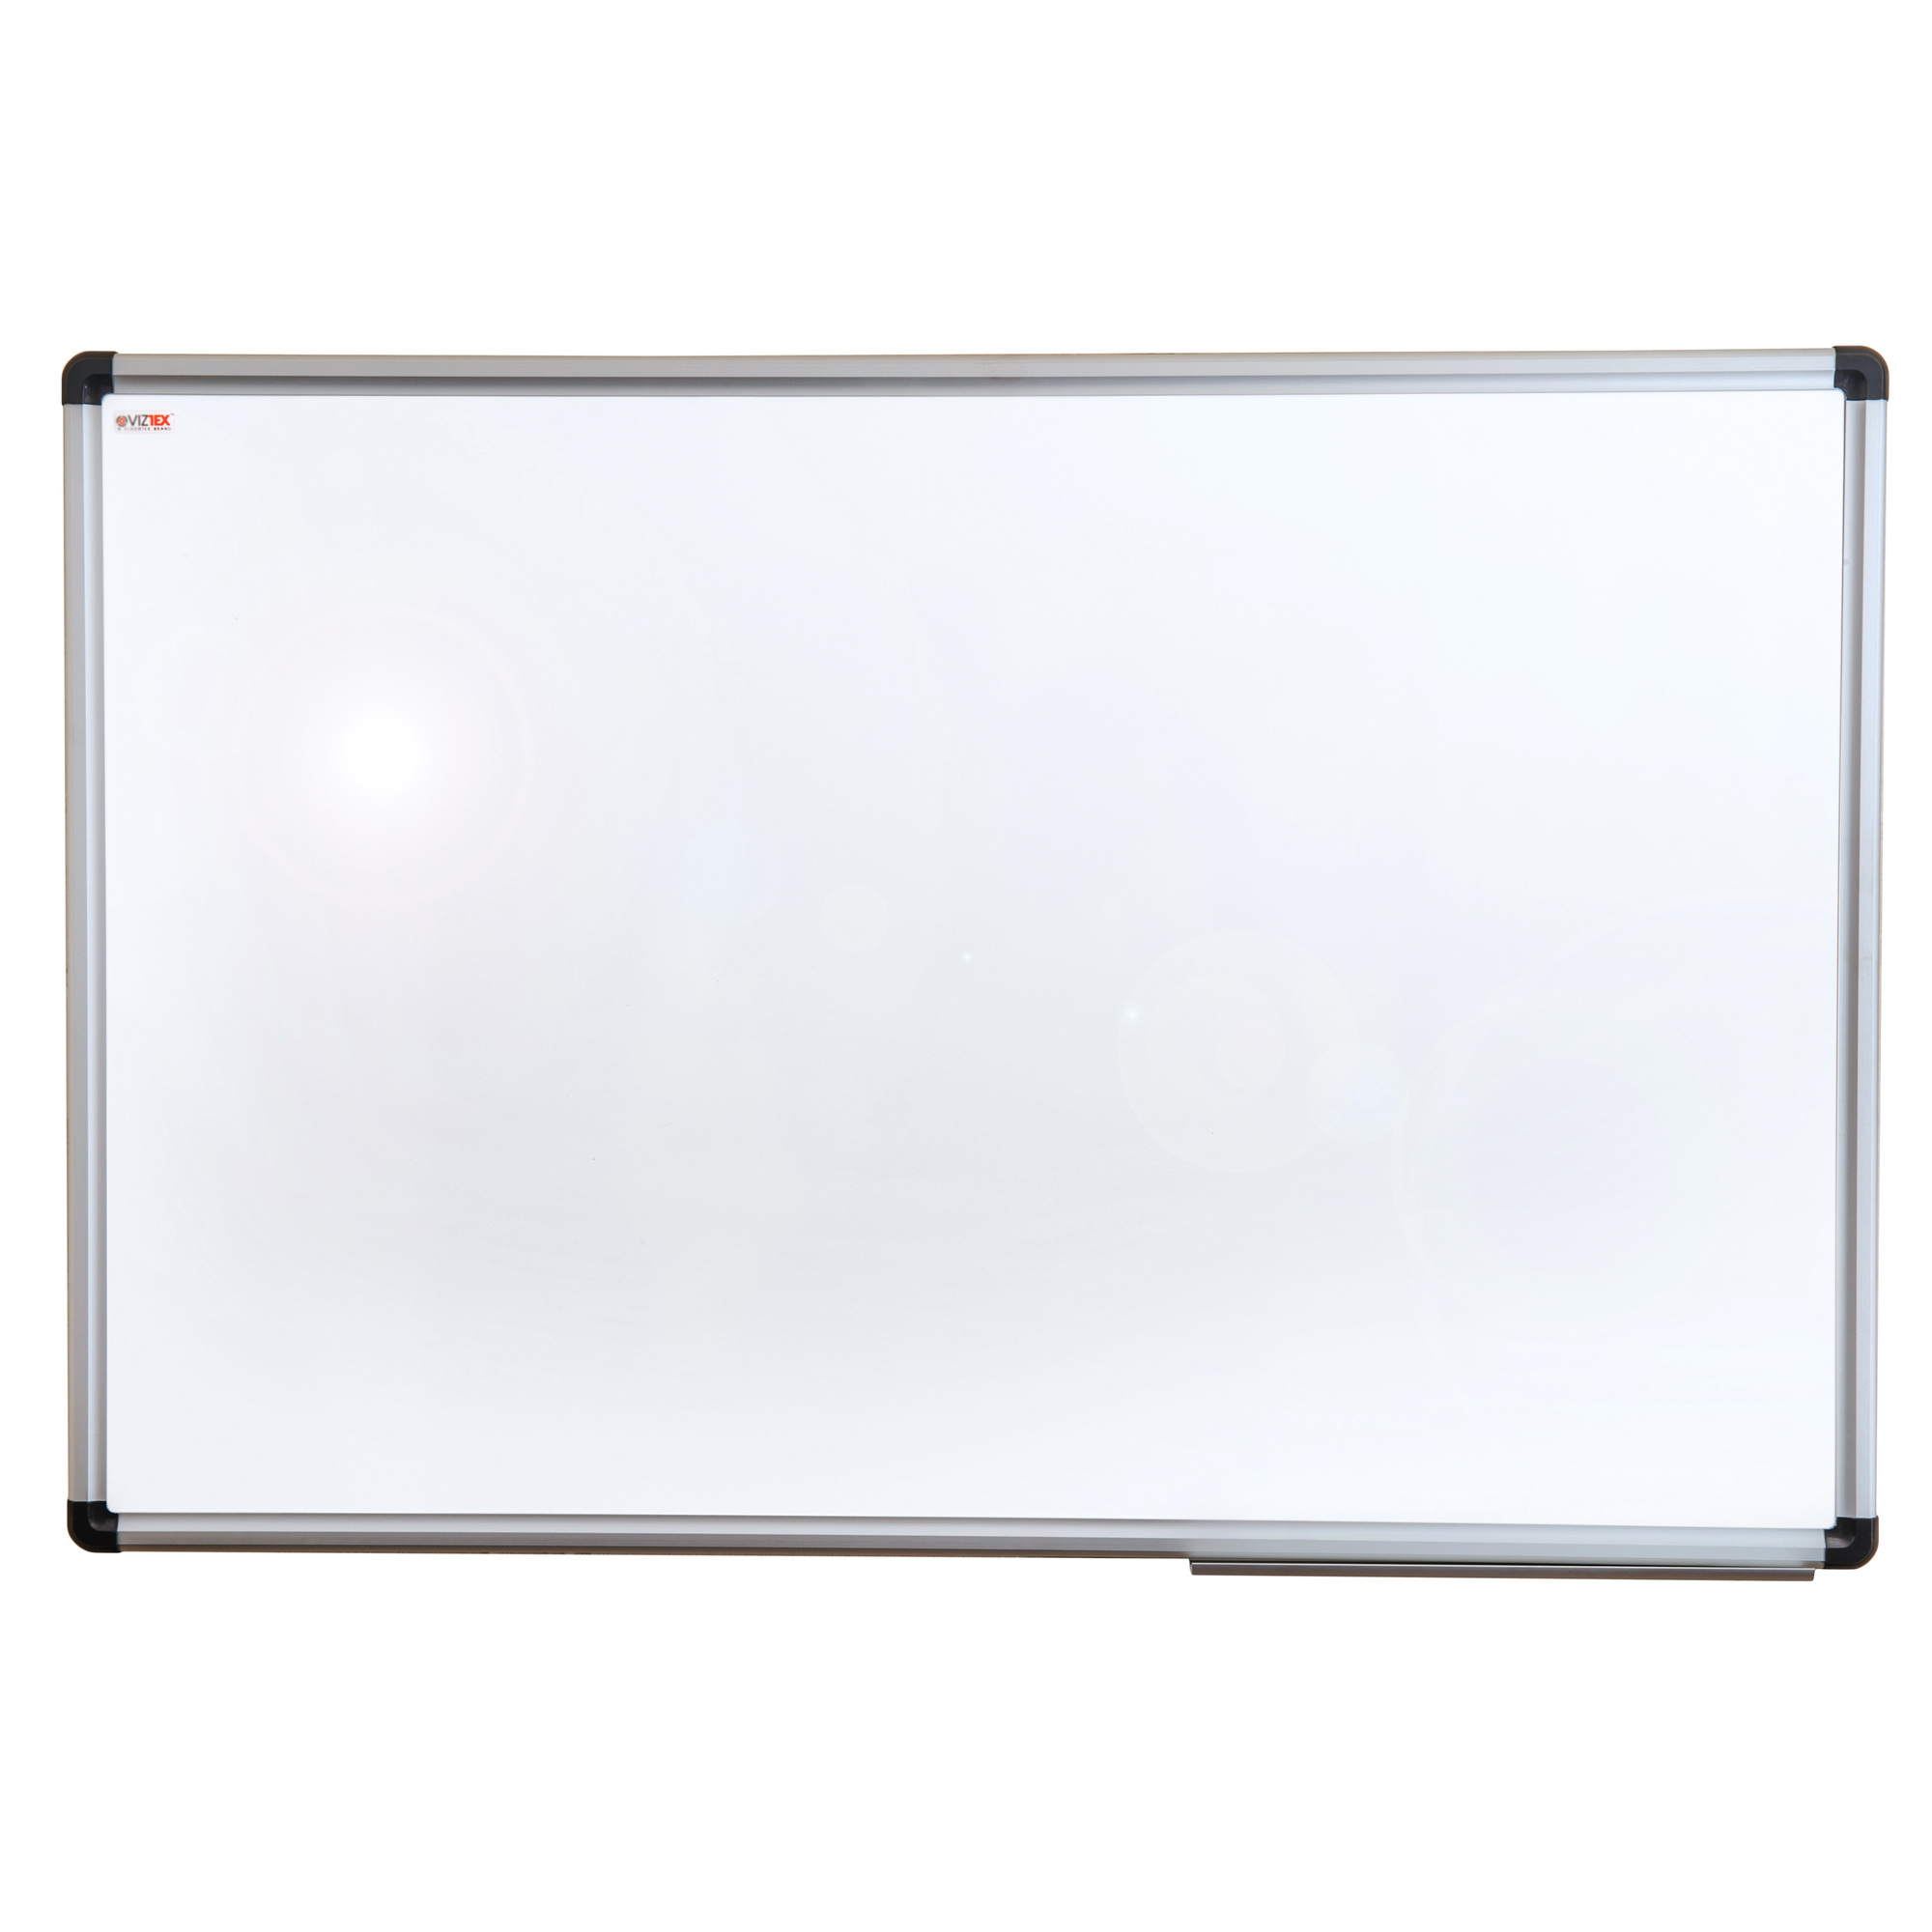 FLOORTEX Viztex , Lacq Steel Dry Erase Board;Aluminium Frame 24Inchx36Inch, Color Finish White, Model FCVLM3624A